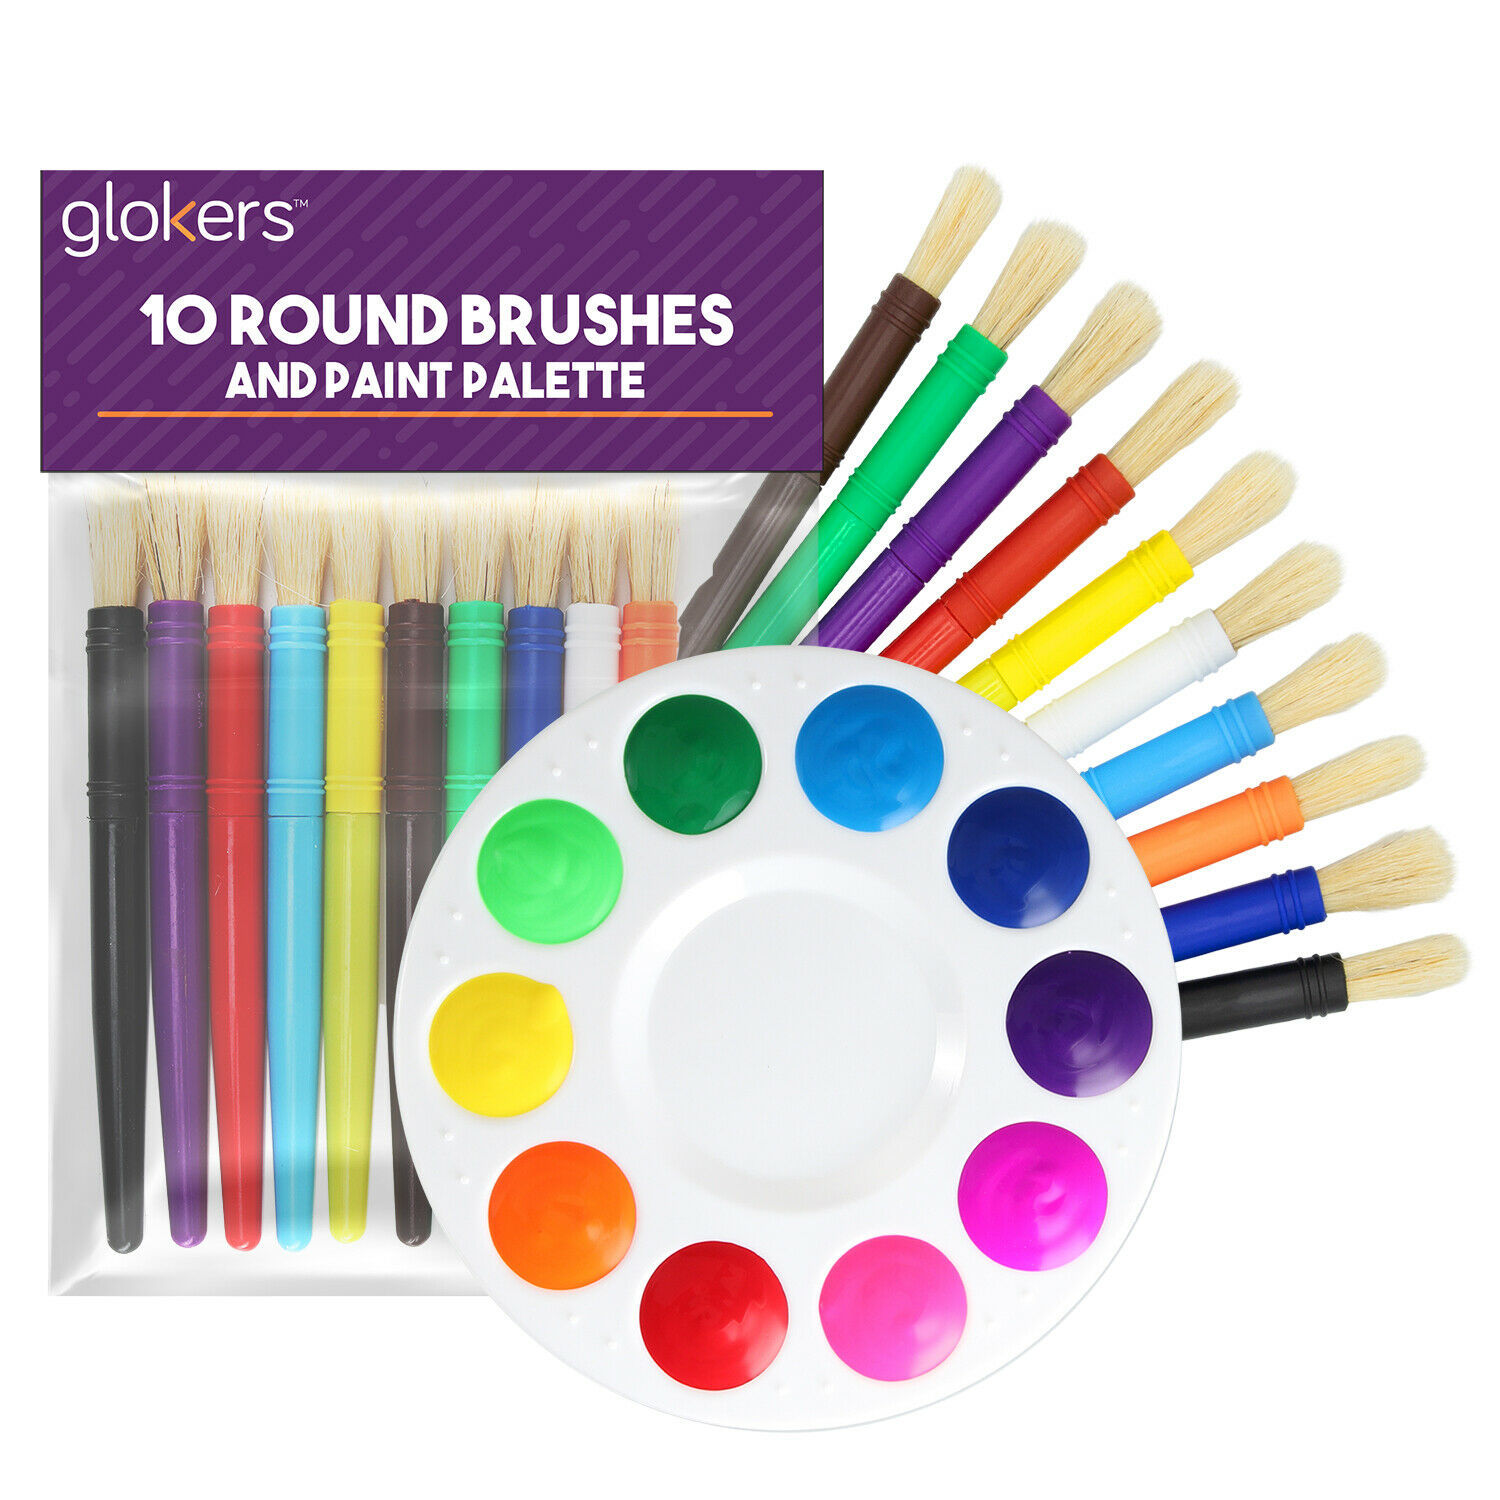 glokers 10-Piece Round Hog Bristle Paintbrushes Set with Paint Palette